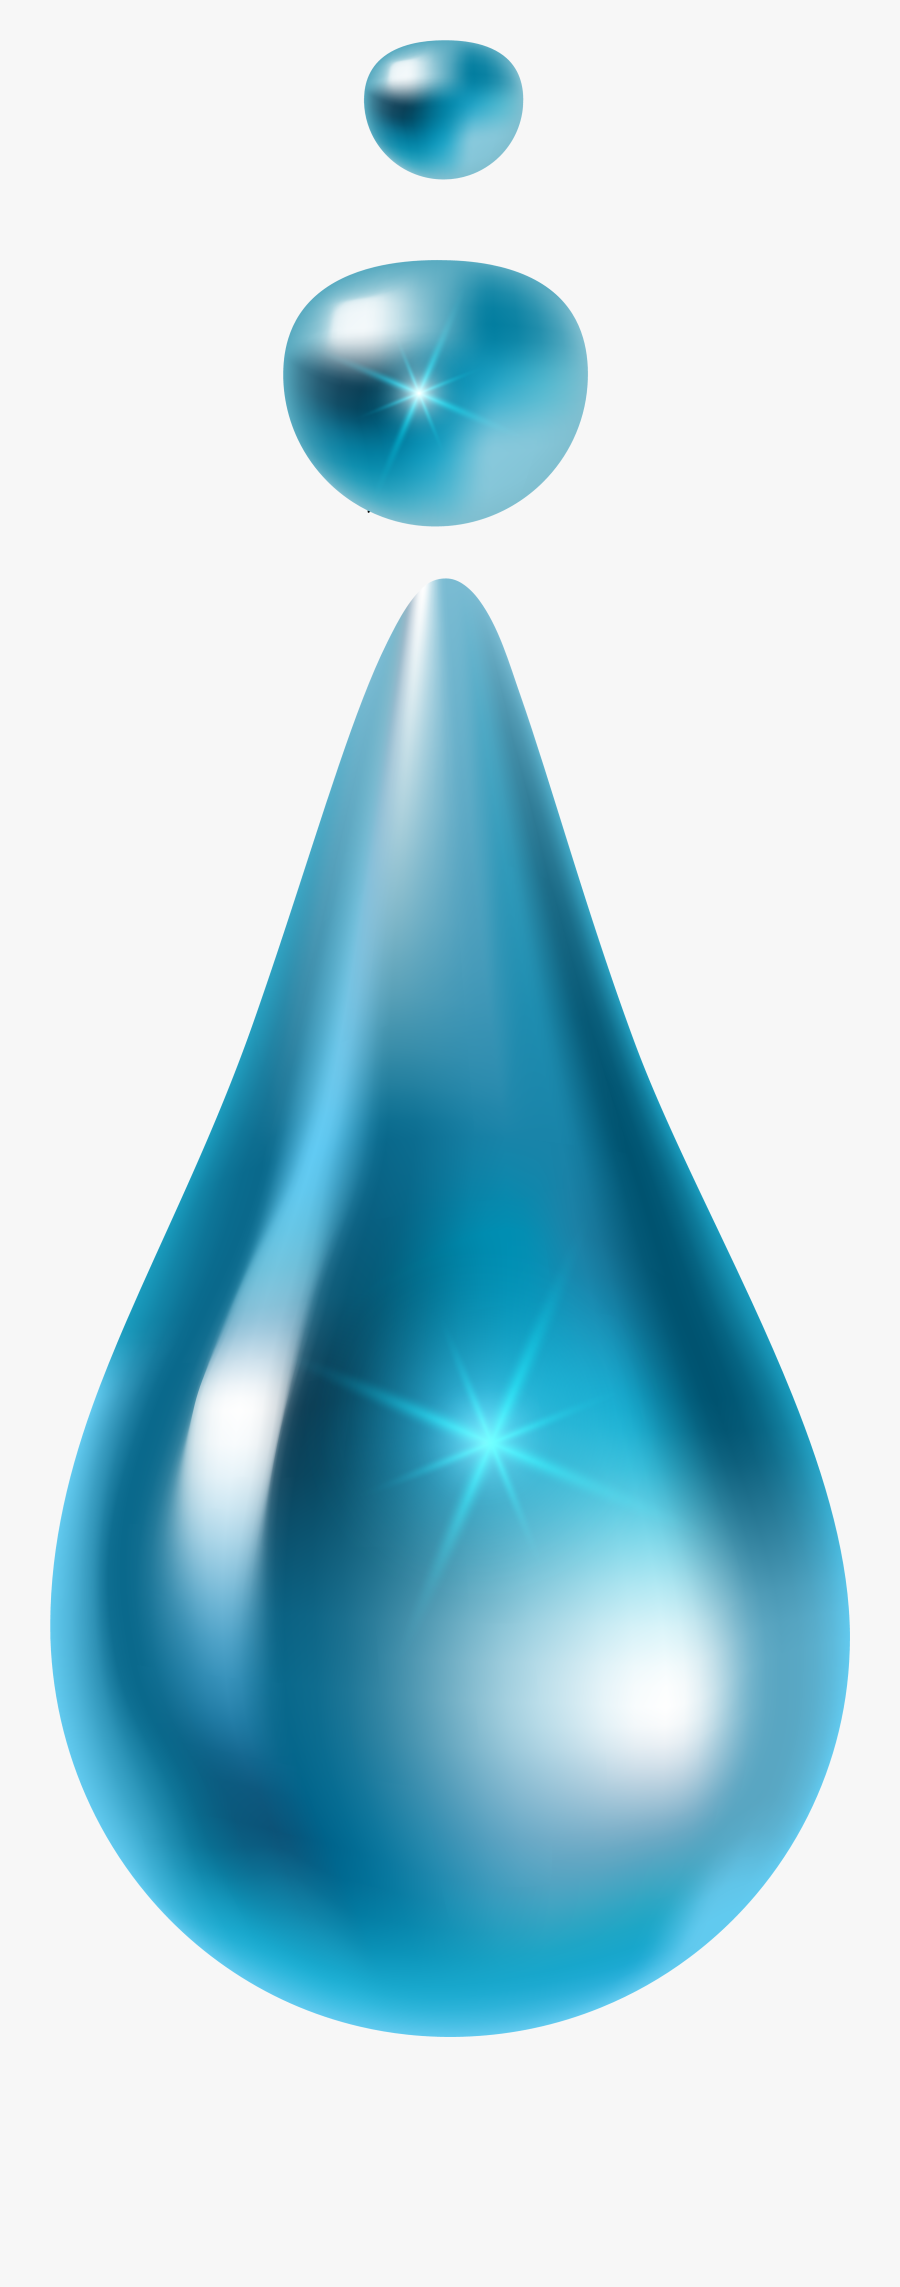 Water Drop Png - Transparent Water Drop Png, Transparent Clipart